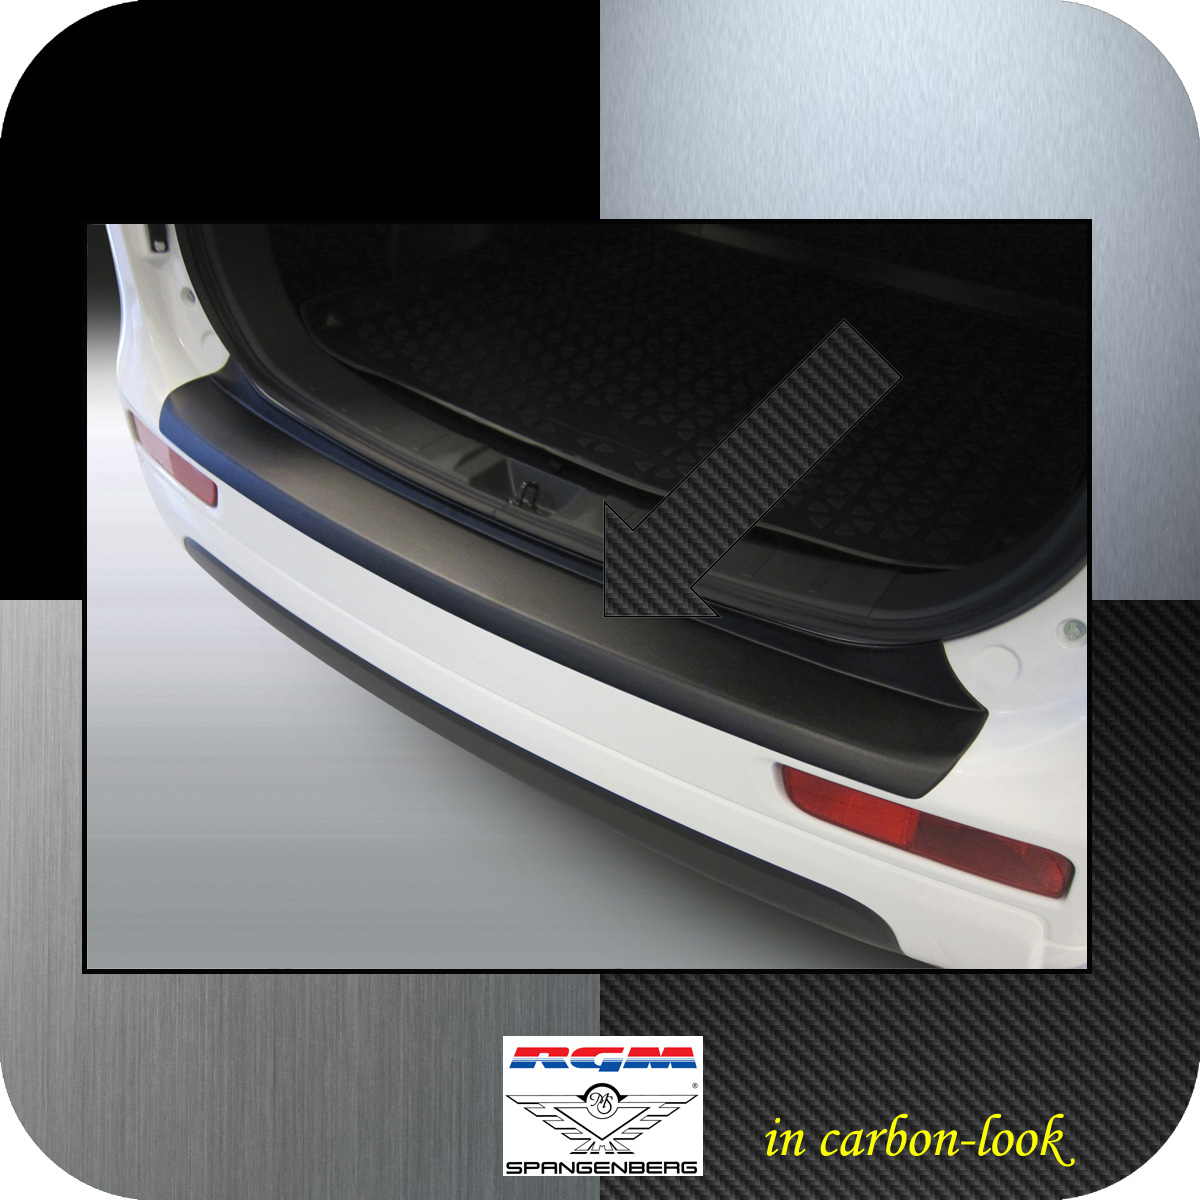 Ladekantenschutz Carbon-Look Mitsubishi Outlander III SUV vor Mopf 12-15 3509597